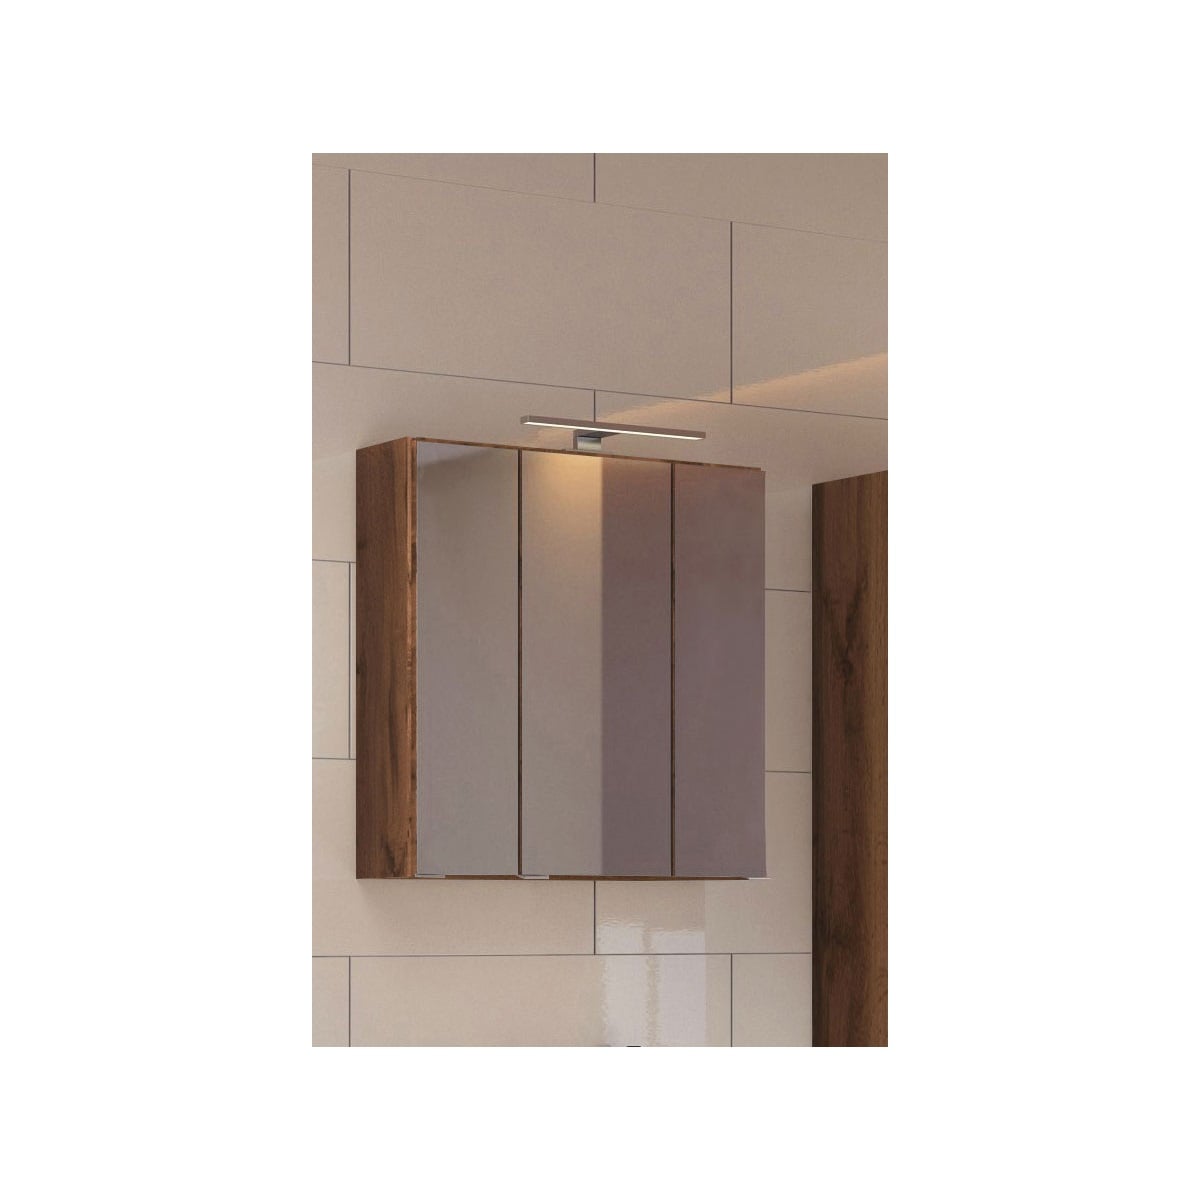 Spiegelschrank Baabe Wotan | Eiche x 60 Boss Beleuchtung LED braun / 66 NB cm Möbel